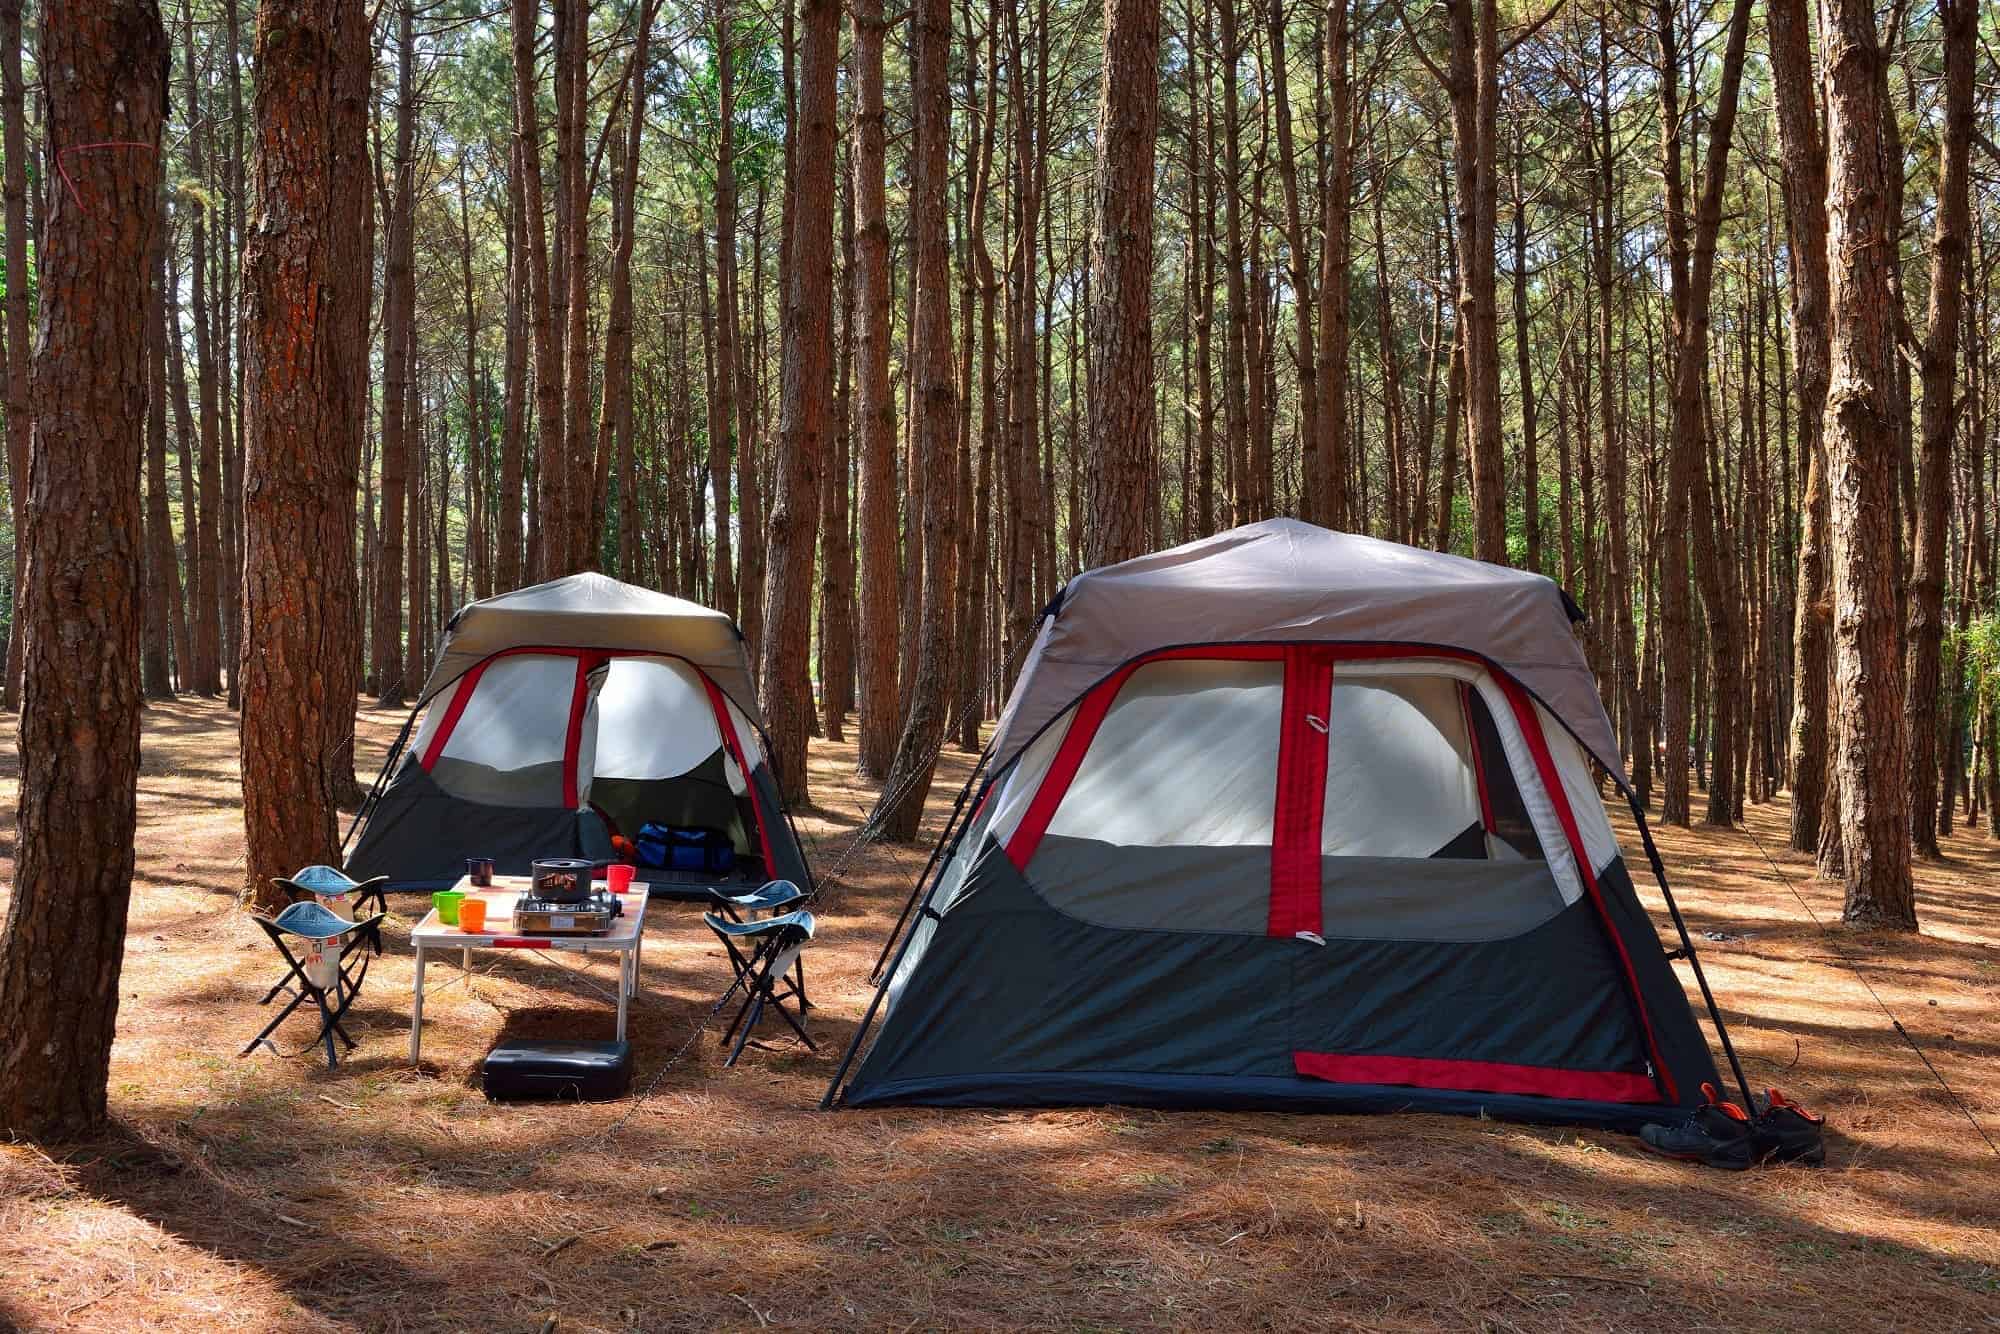 https://blog.trekaroo.com/wp-content/uploads/2016/07/Top-family-camping-gear-shutterstock.jpg